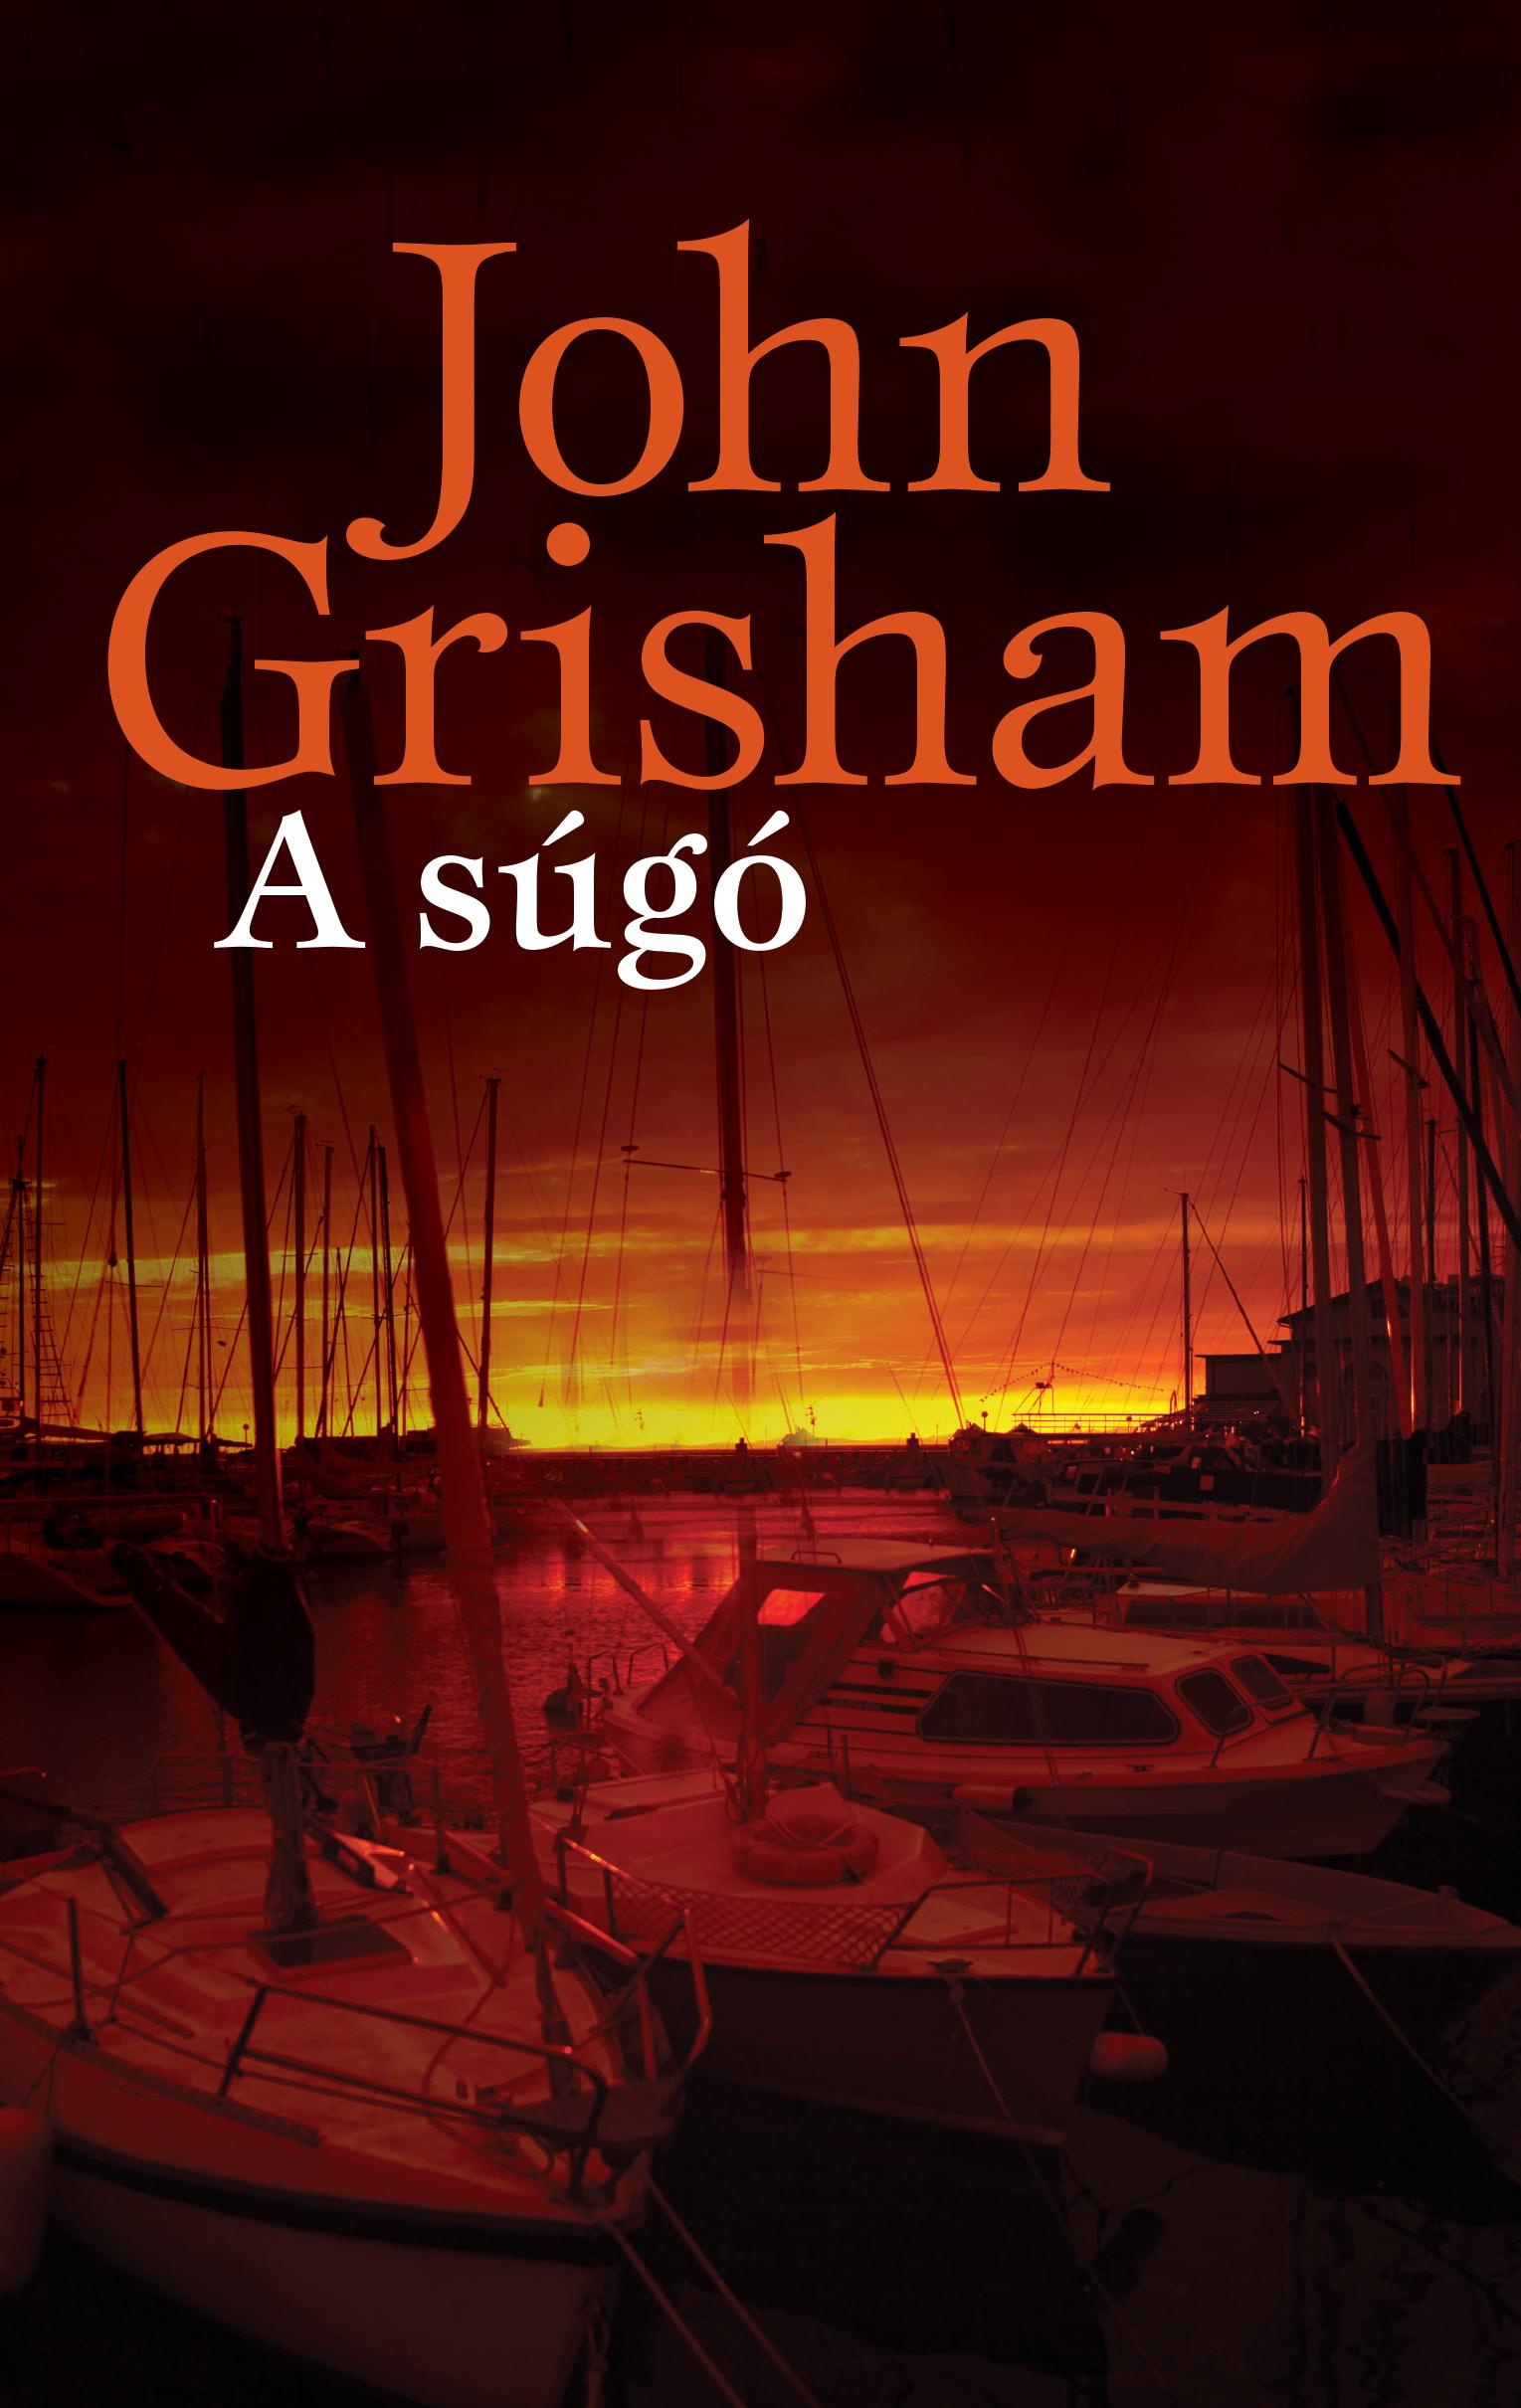 John Grisham - A súgó